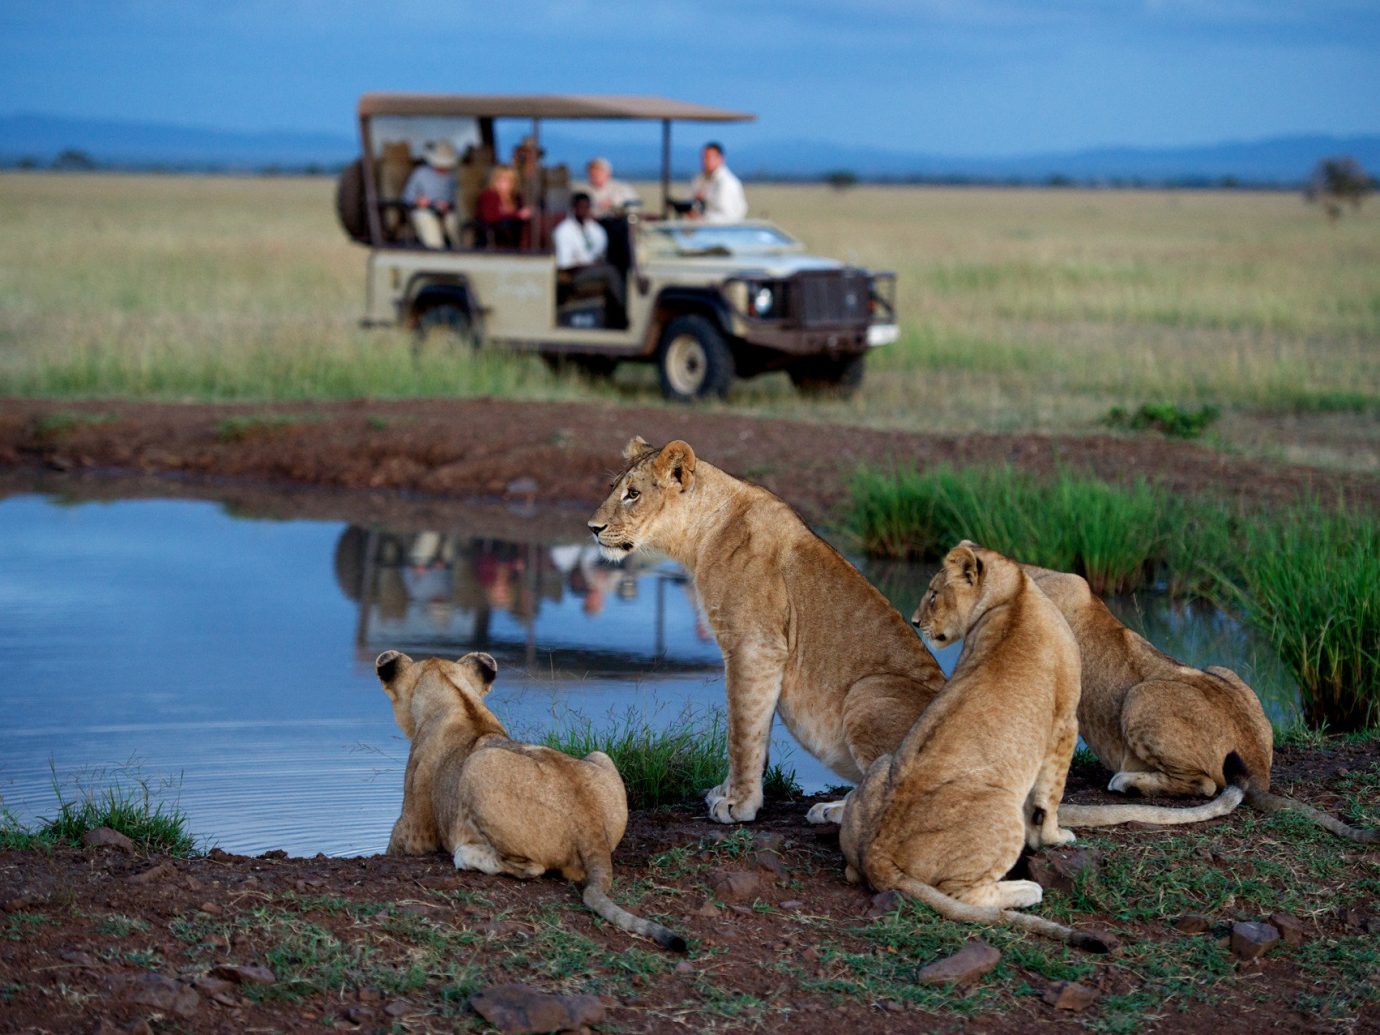 Singita Serengeti House, Tanzania - Lions in Africa